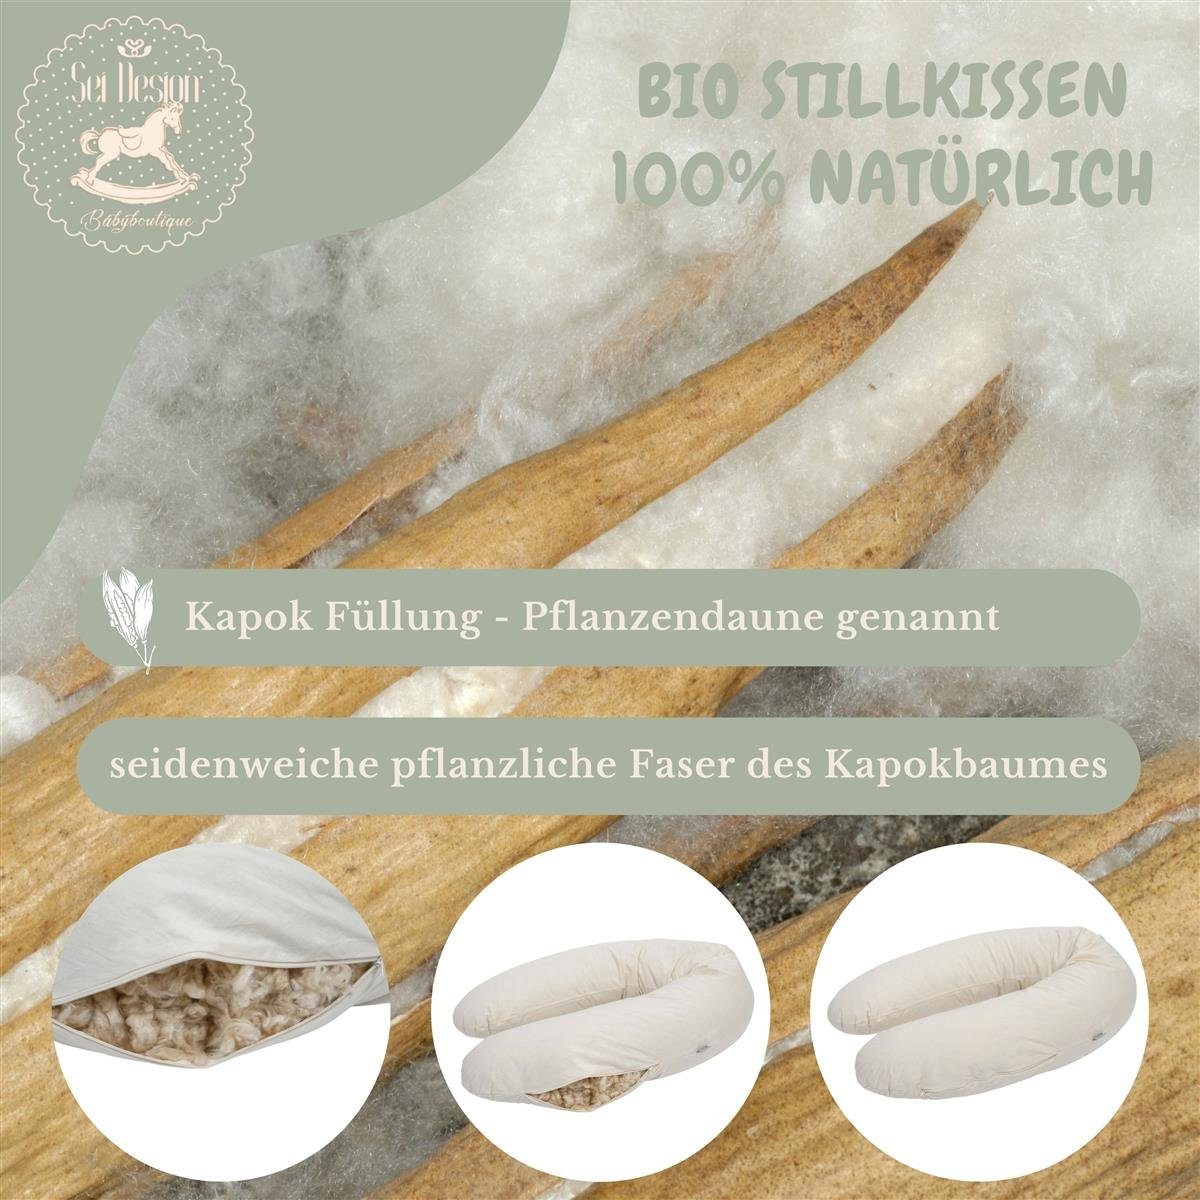 SEI Design Stillkissen 190x30 + - Kapok Bio Baumwo, Kissen 100% Baumwolle Füllung Bio-Stillkissen - cm 100% Bezug BIO Kapok + Bezug